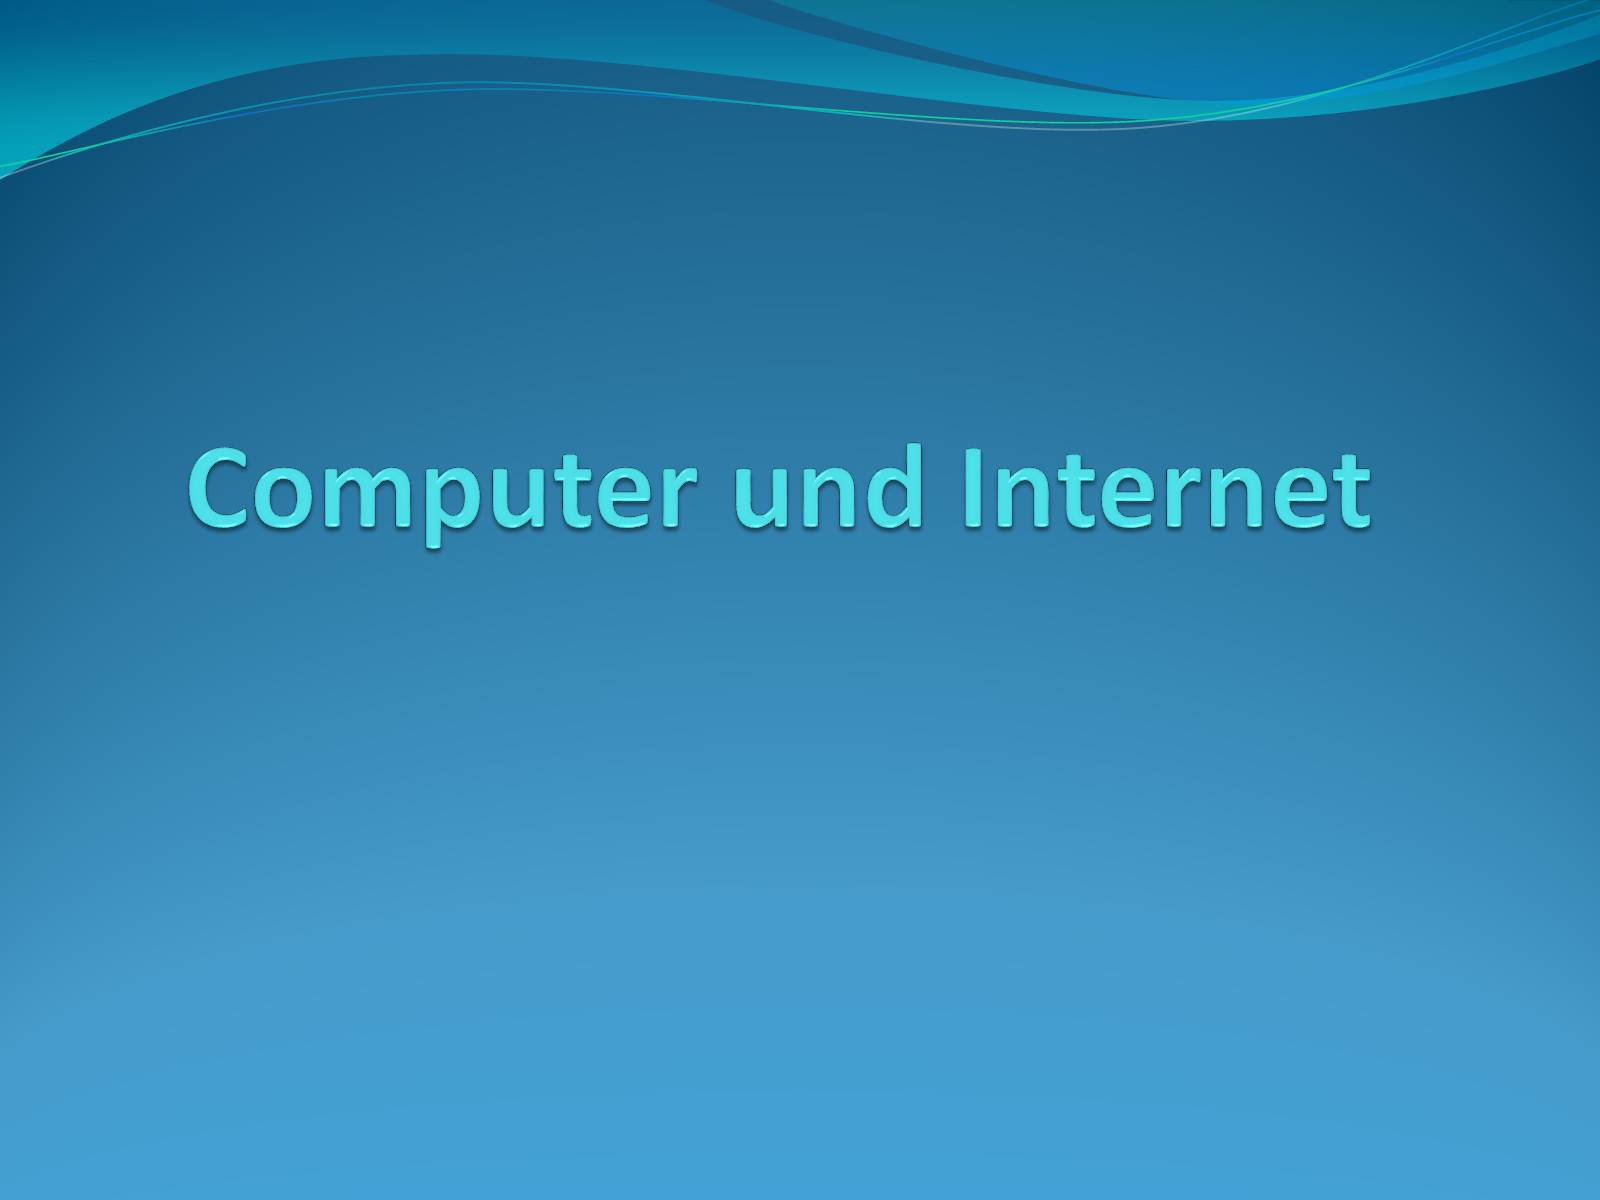 Презентація на тему «Computer und Internet» - Слайд #1